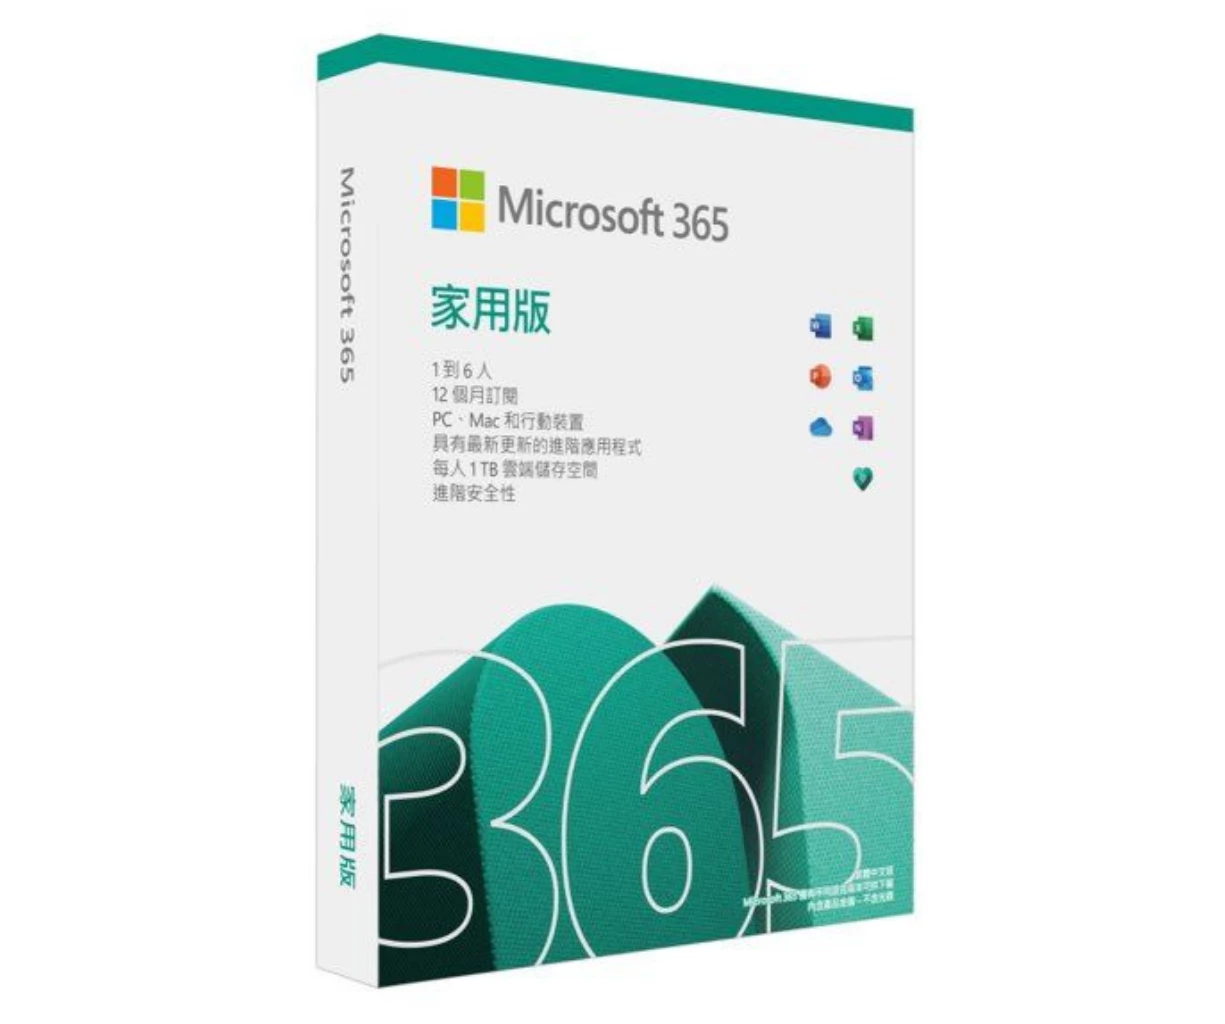 Microsoft 365 Family (Chinese)